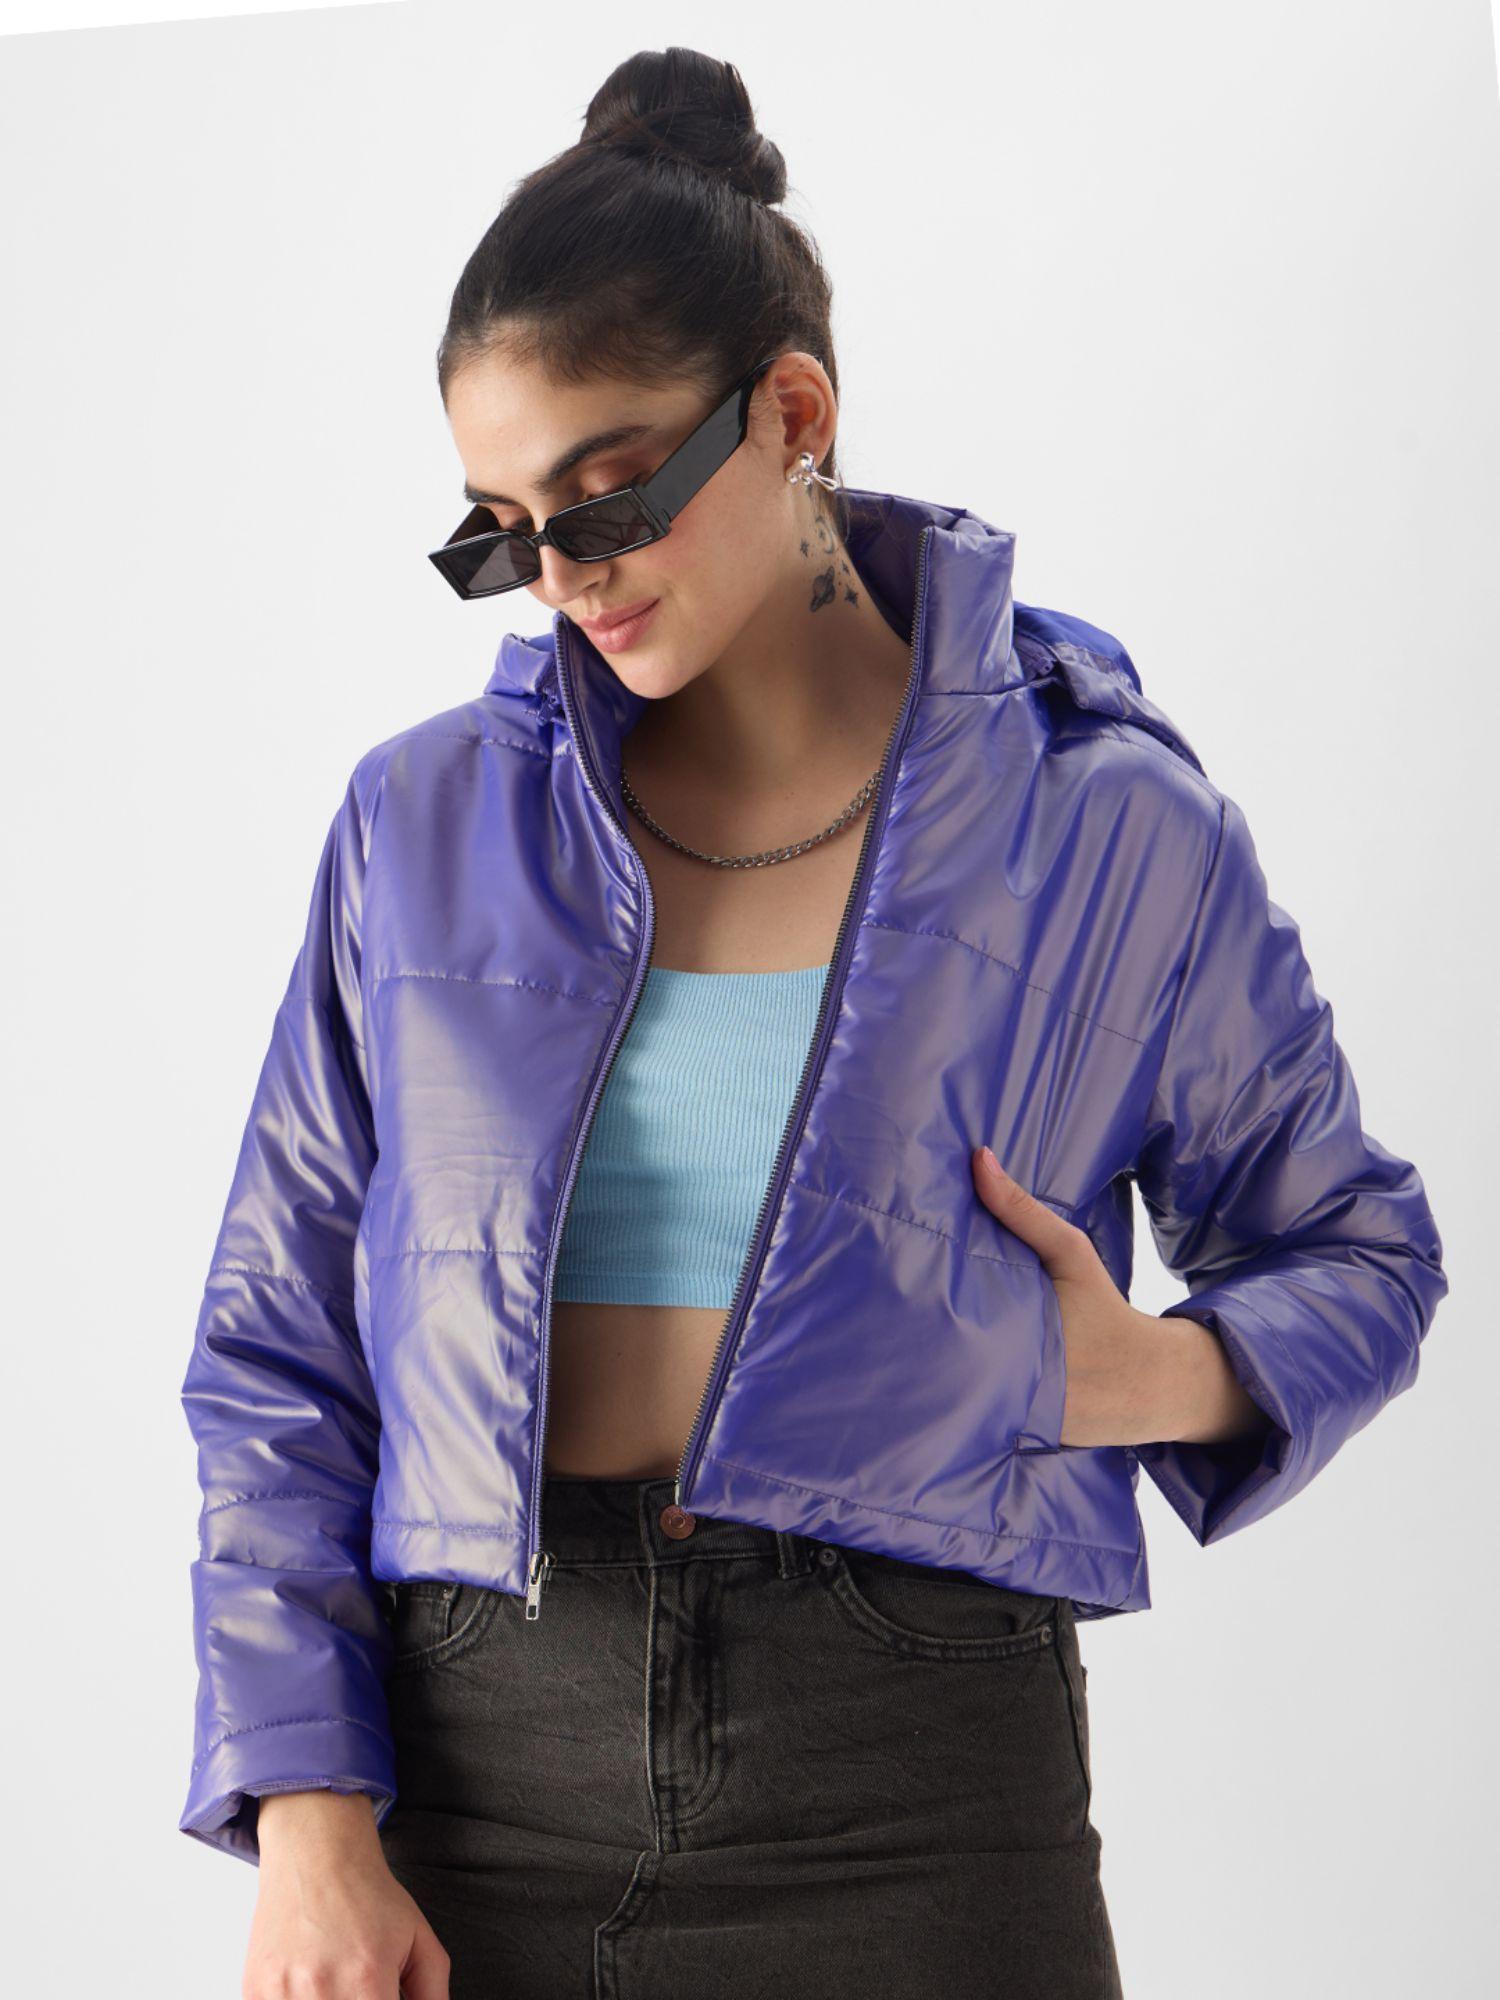 originals : shining star women puffer jacket purple